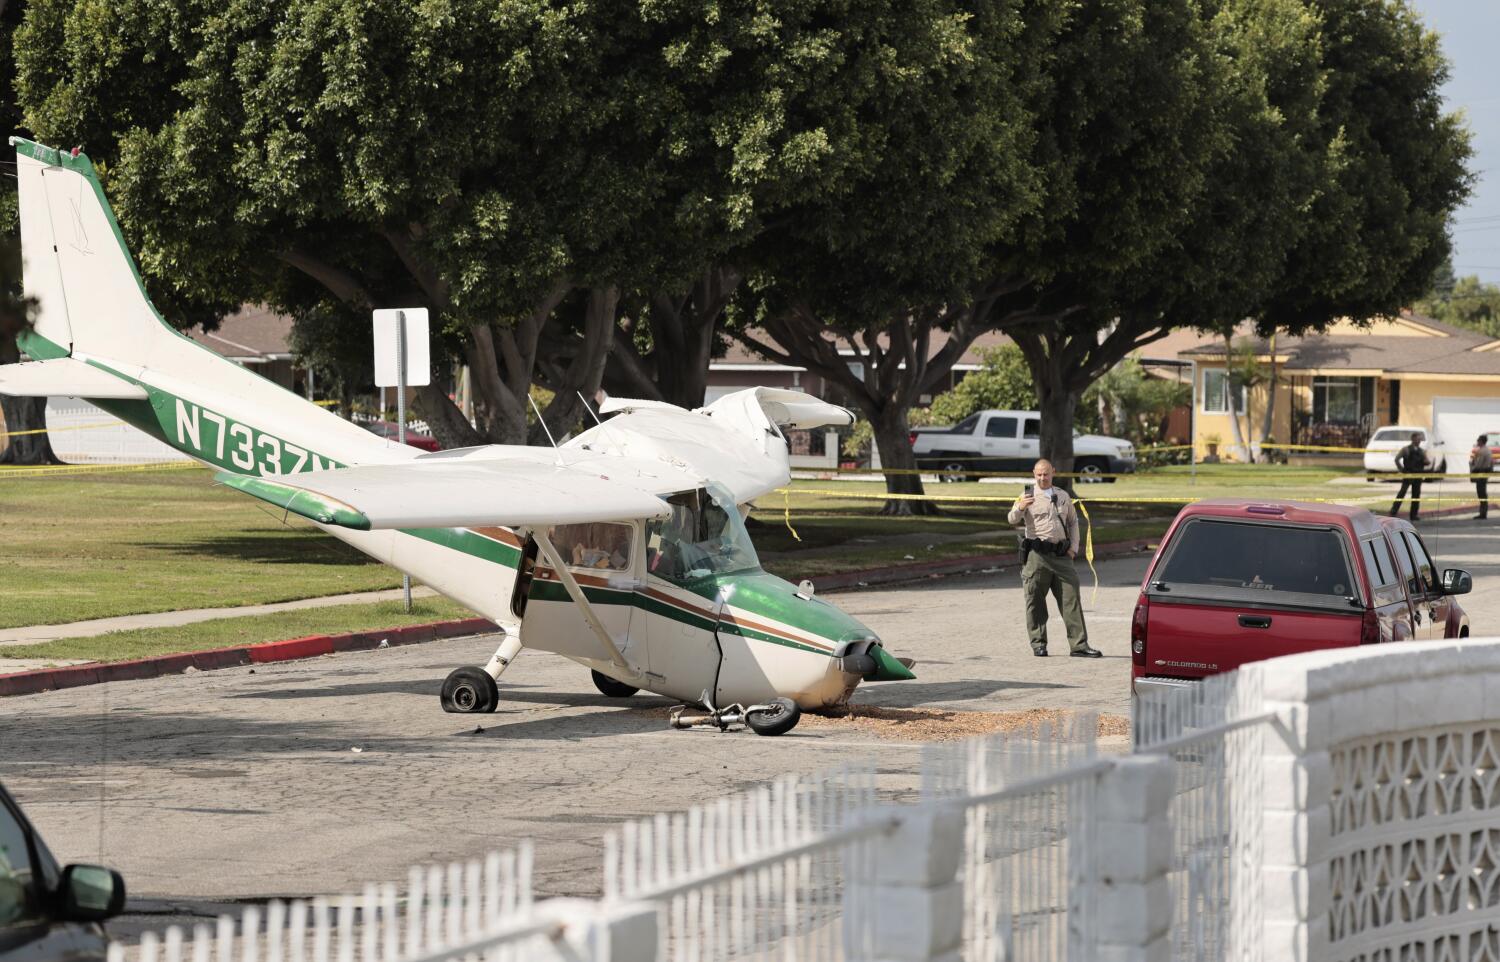 Plane crash-lands in Compton neighborhood. No one is injured